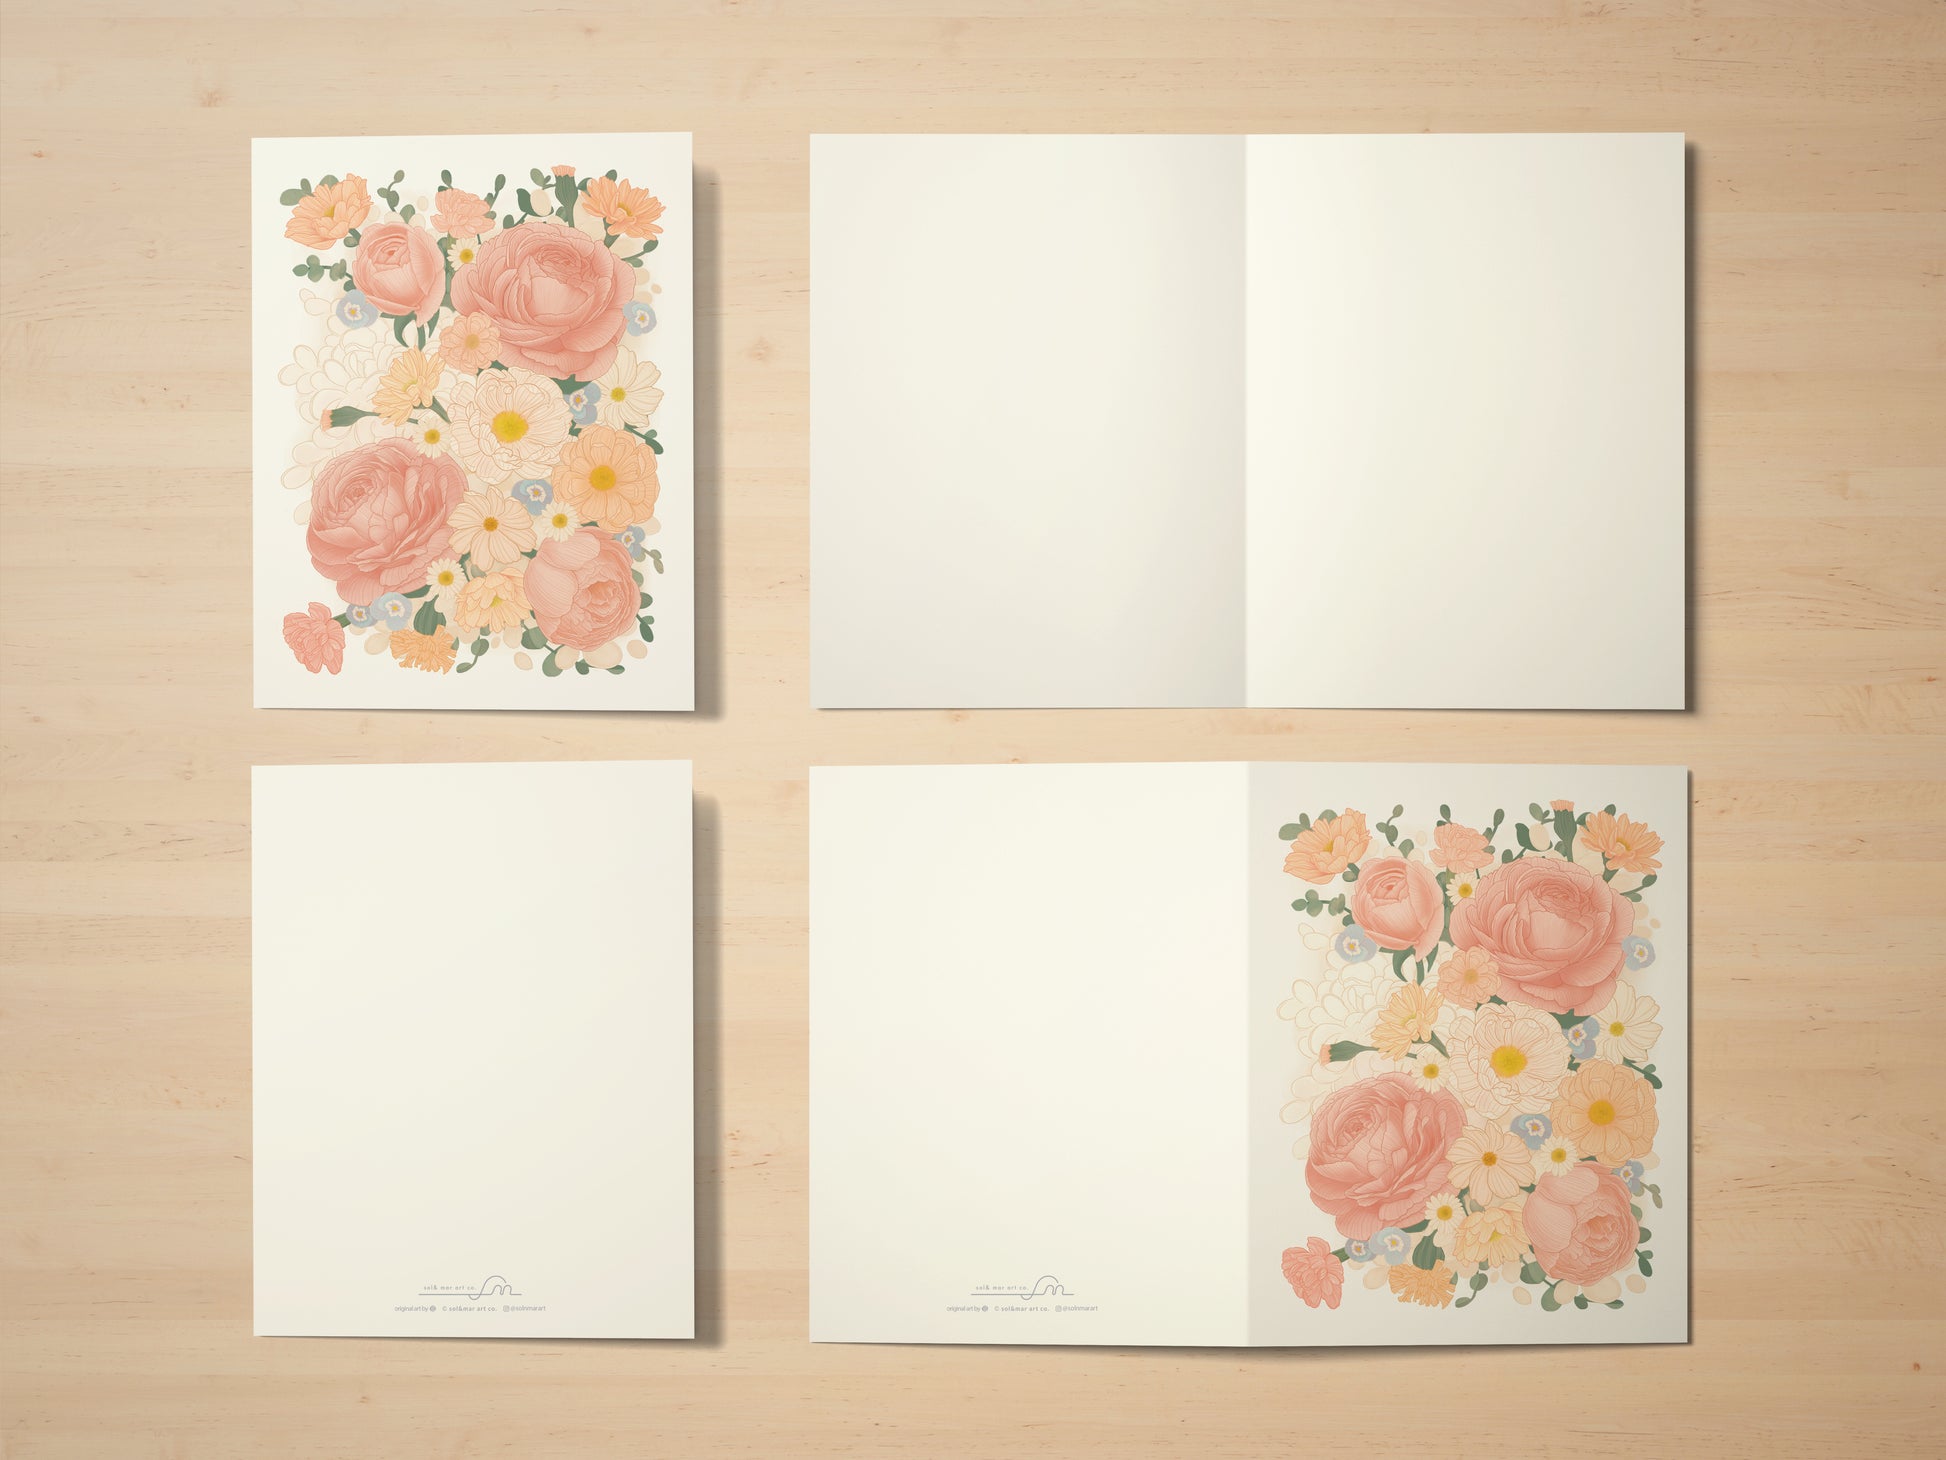 Fall Bouquet Greeting card/ Vintage flower card/ Flower Illustration/ Botanical Art/ Floral Art Print / A2 Size